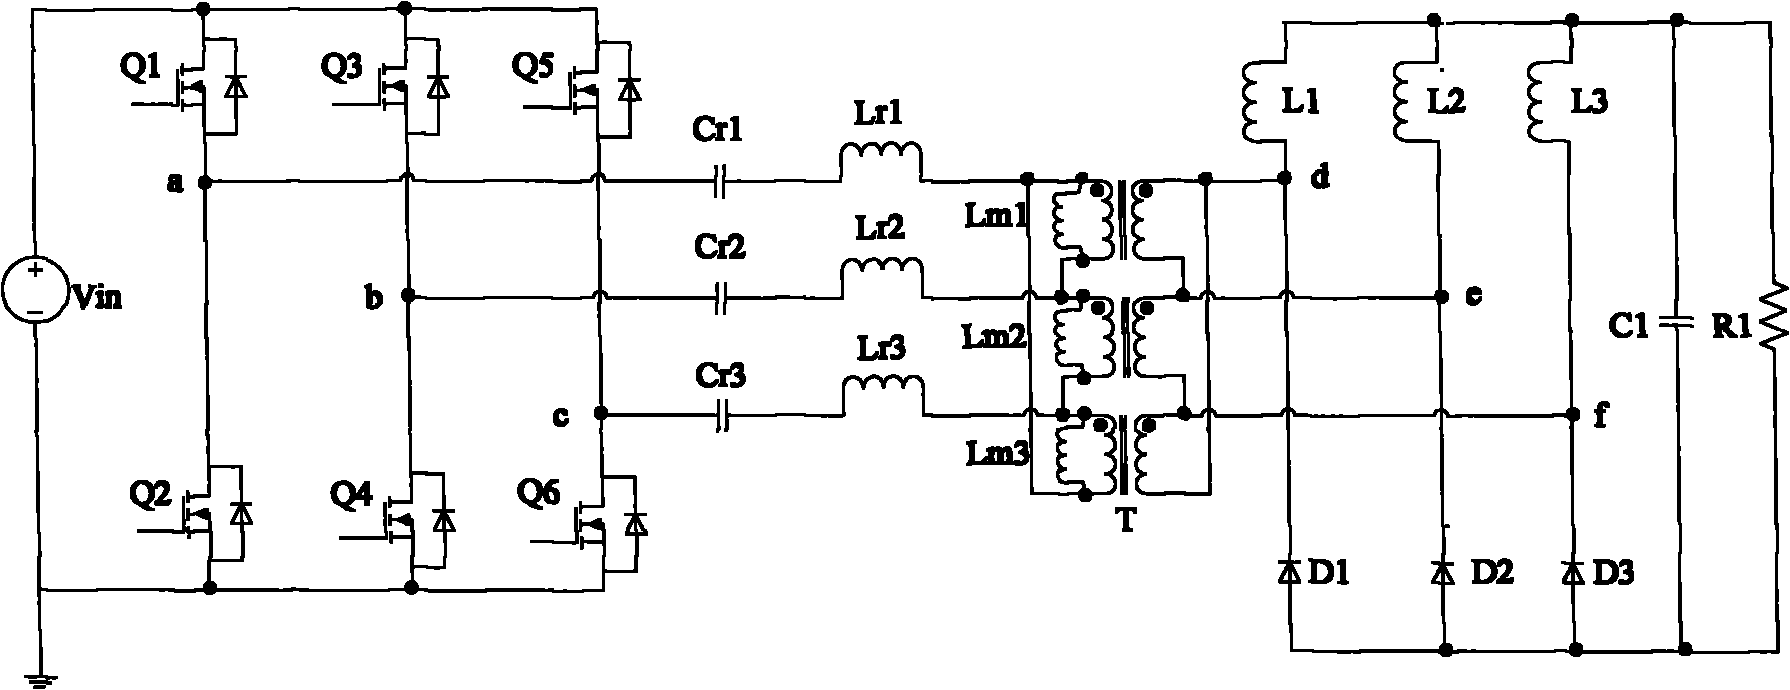 Low output loss LLC resonant converter